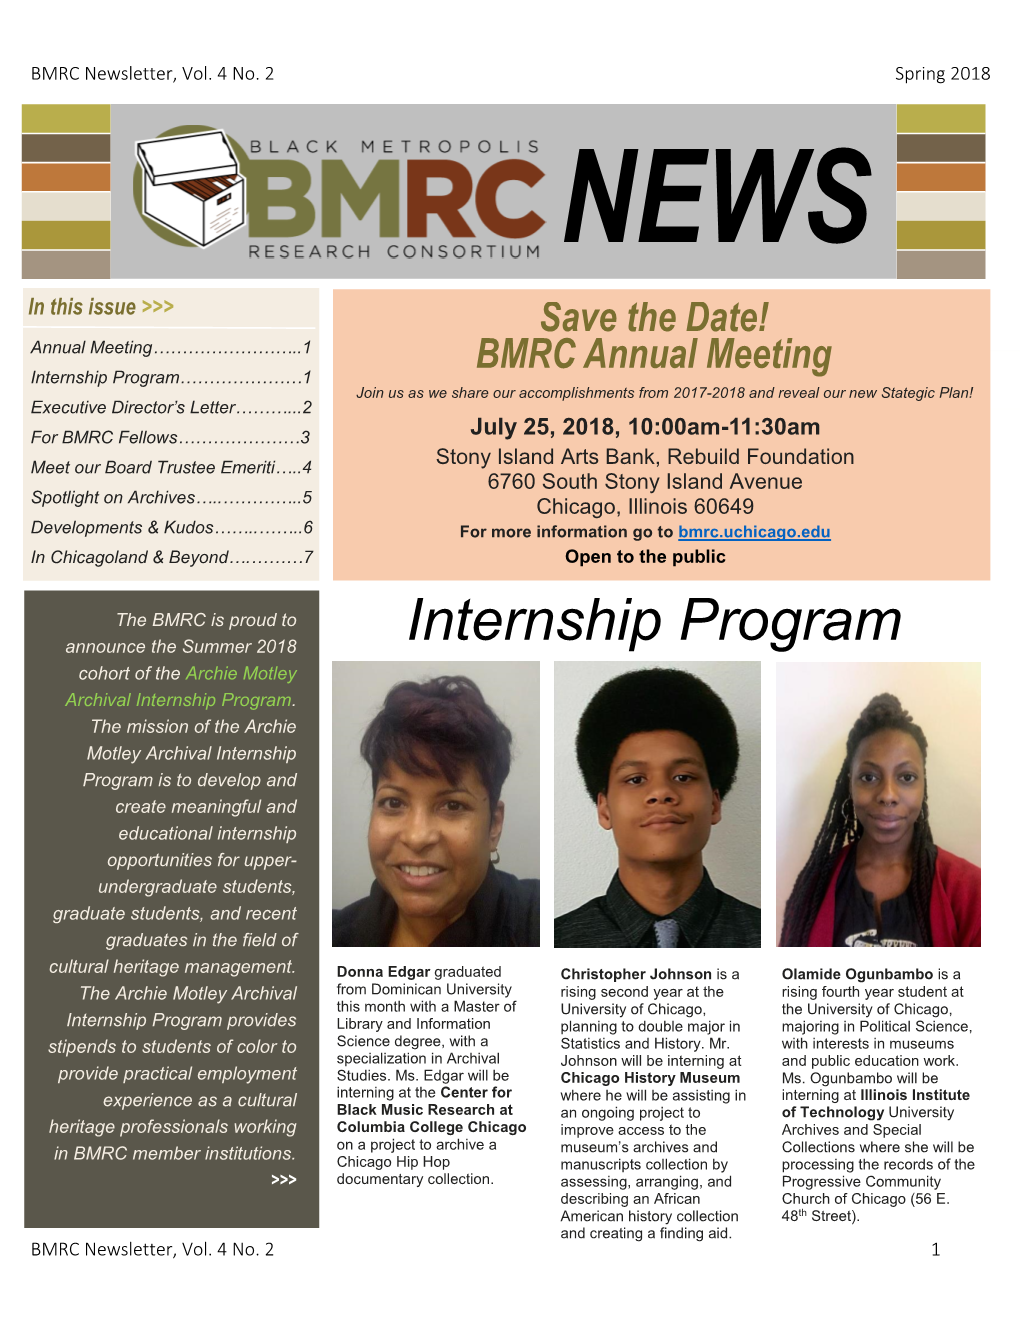 BMRC Spring 2018 Newsletter